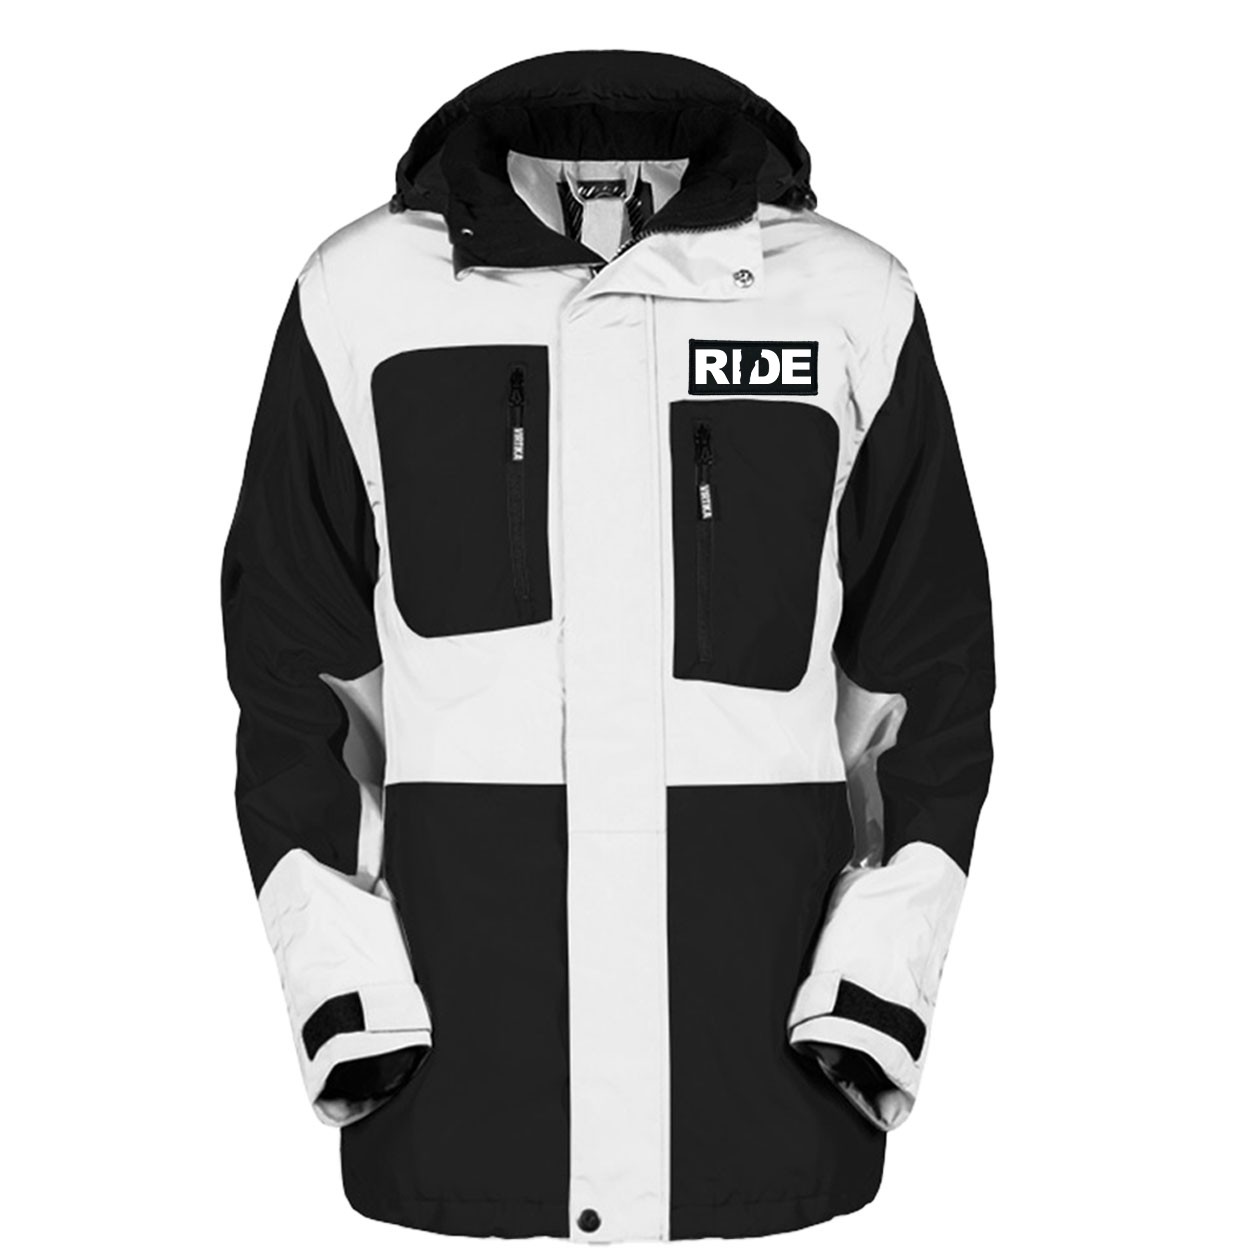 Ride Vermont Pro Waterproof Breathable Winter Virtika Jacket Black/White (White Logo)